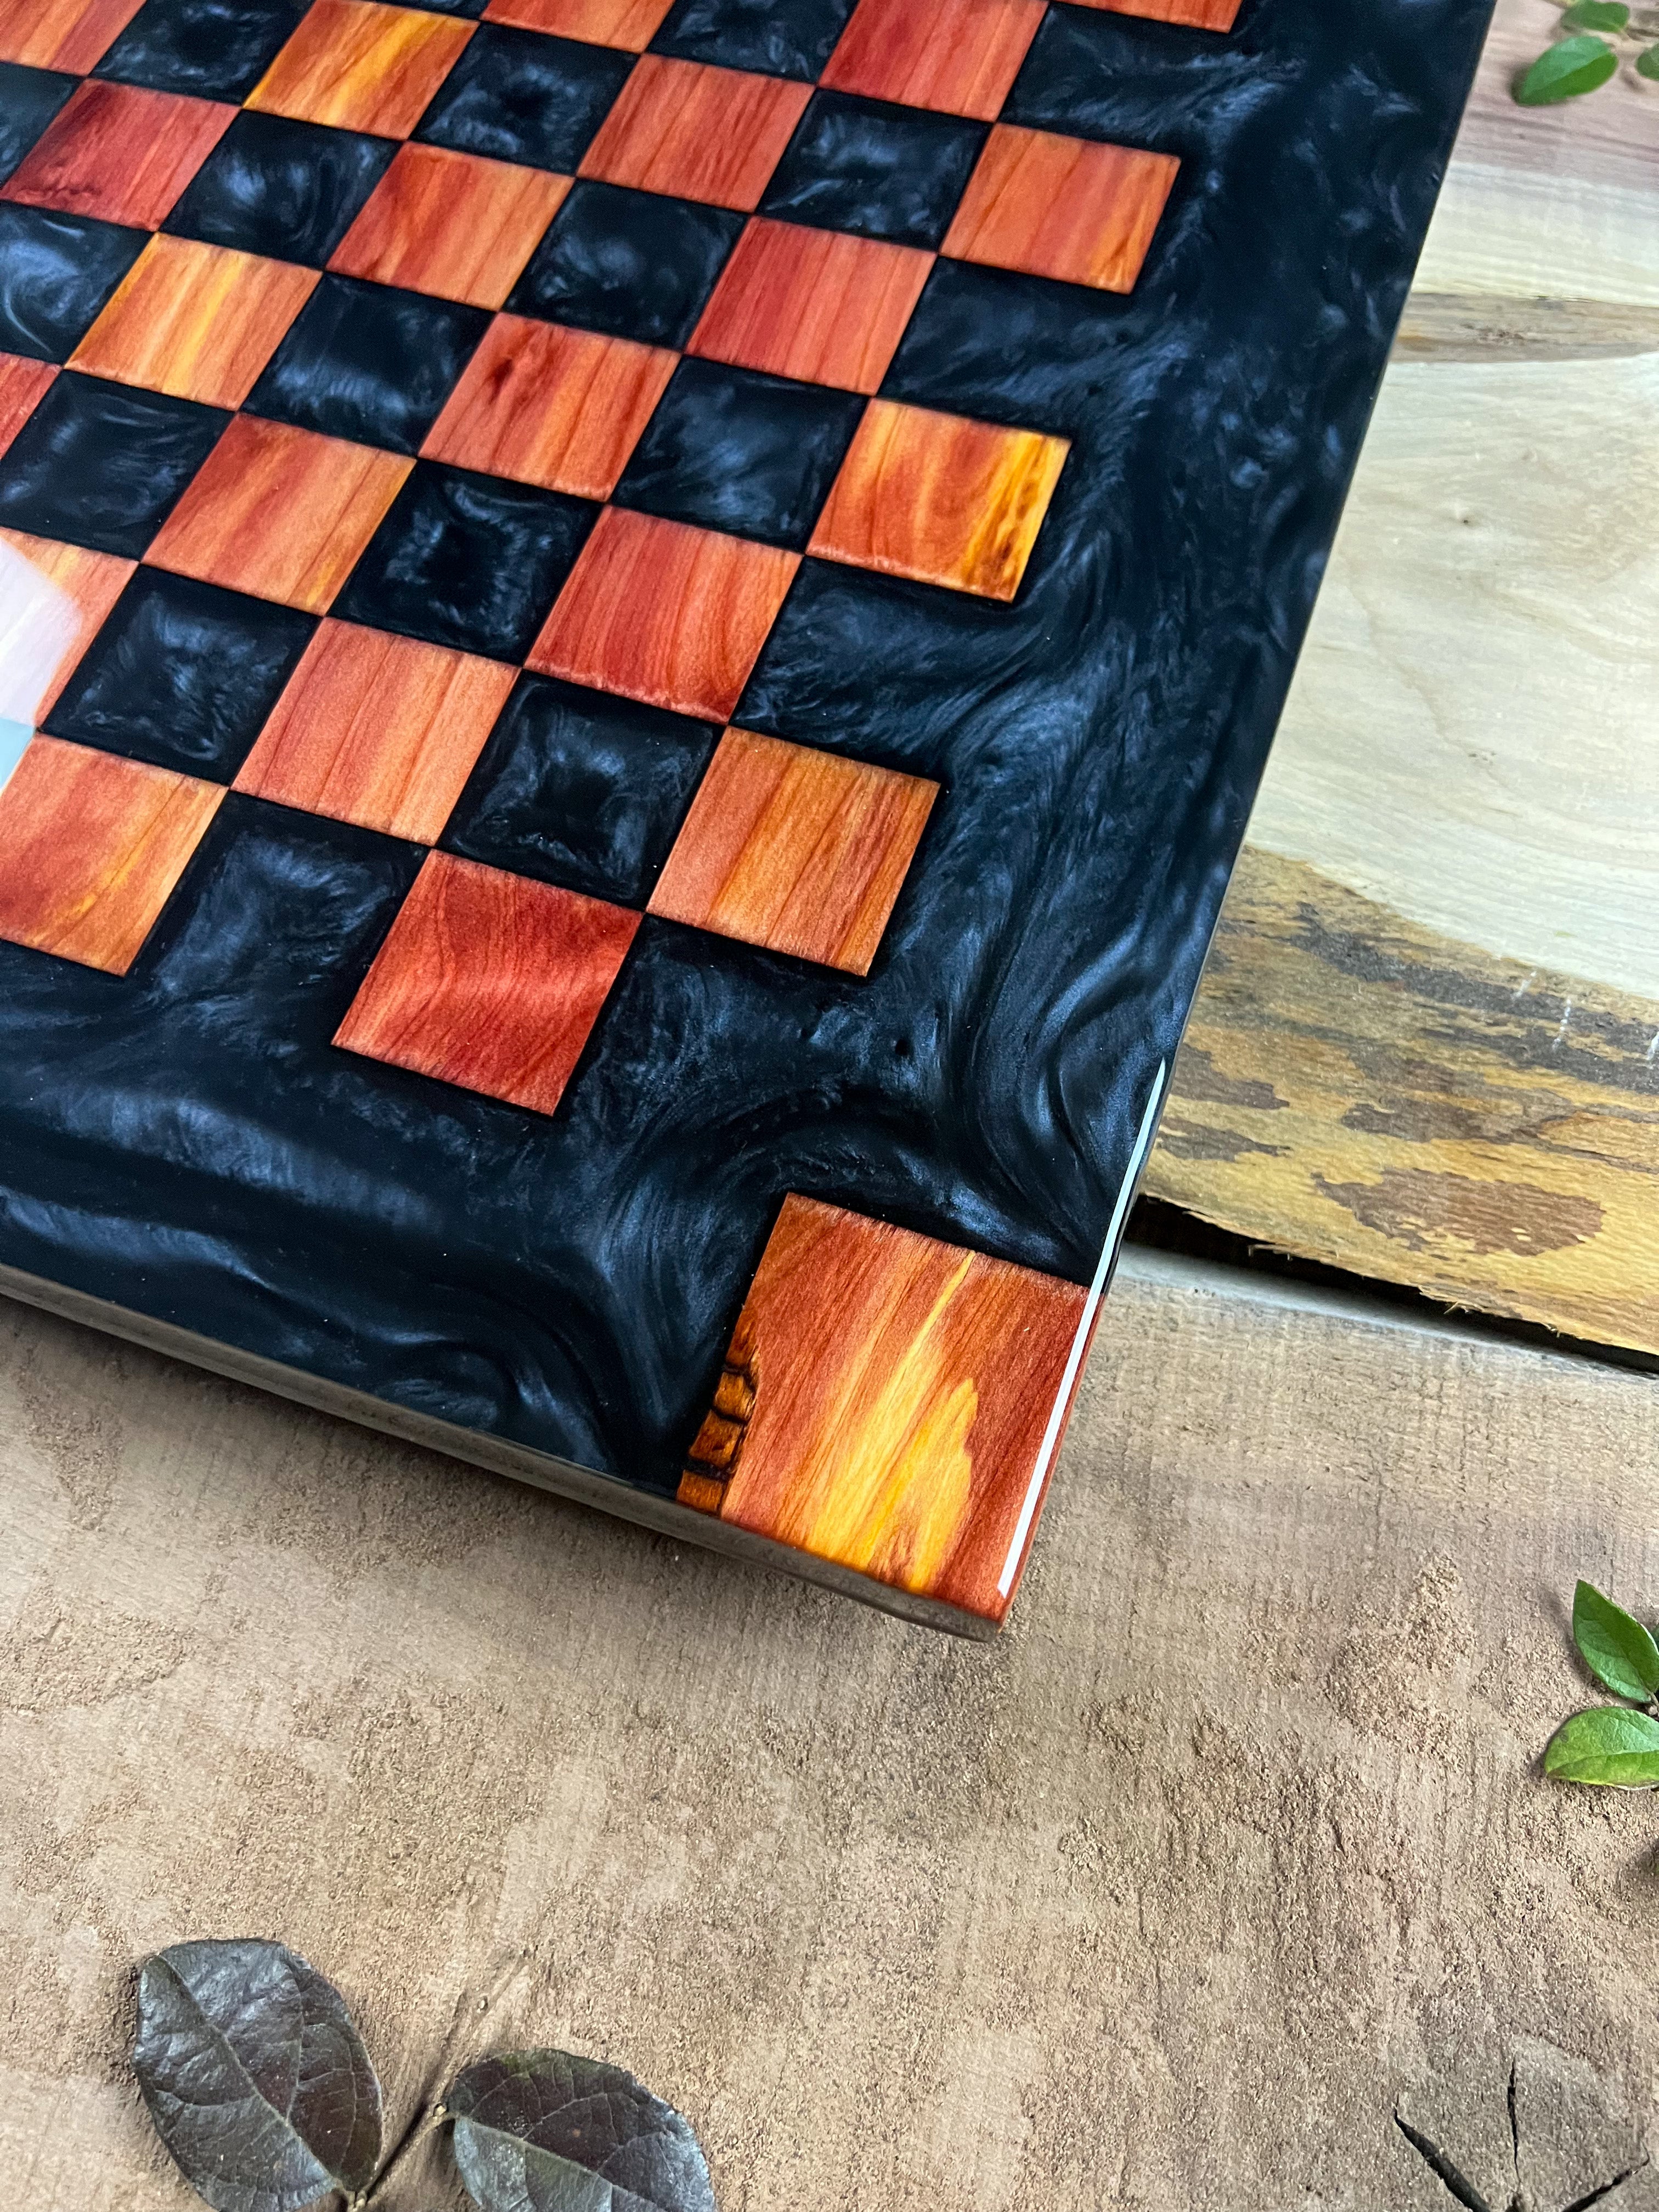 Aromatic Cedar Black Onyx Chess Board